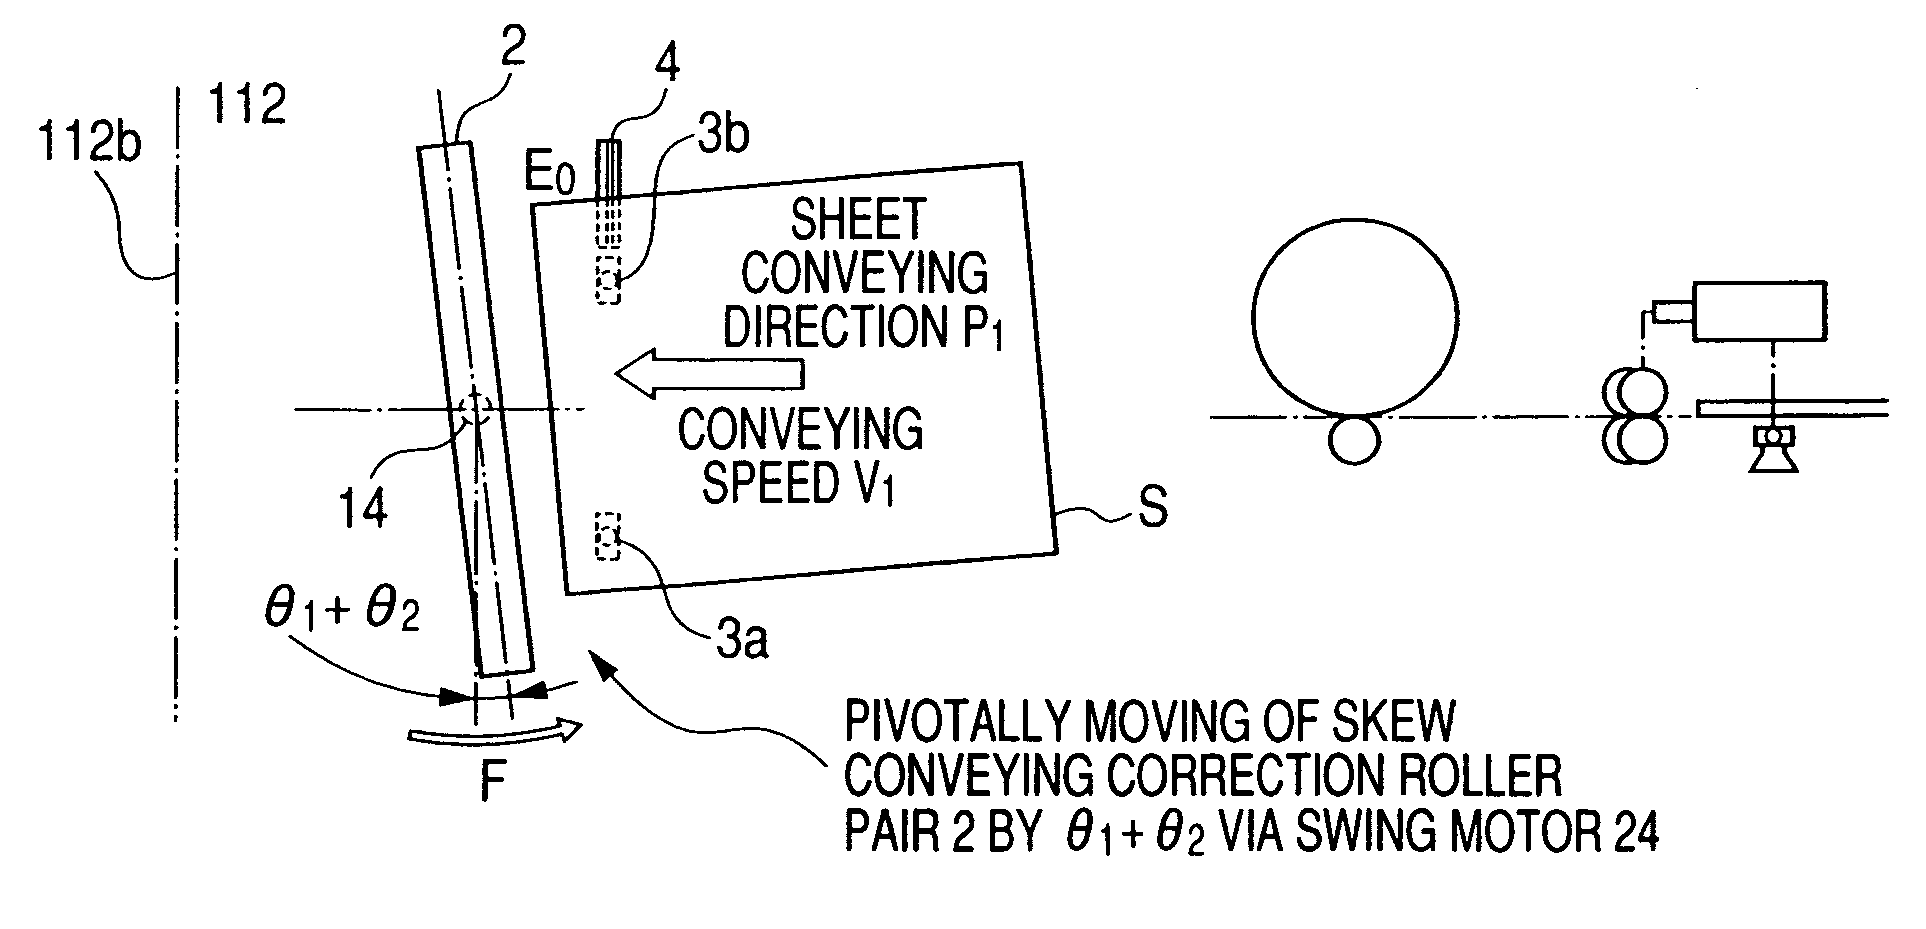 Sheet conveying apparatus, image forming apparatus and image reading apparatus